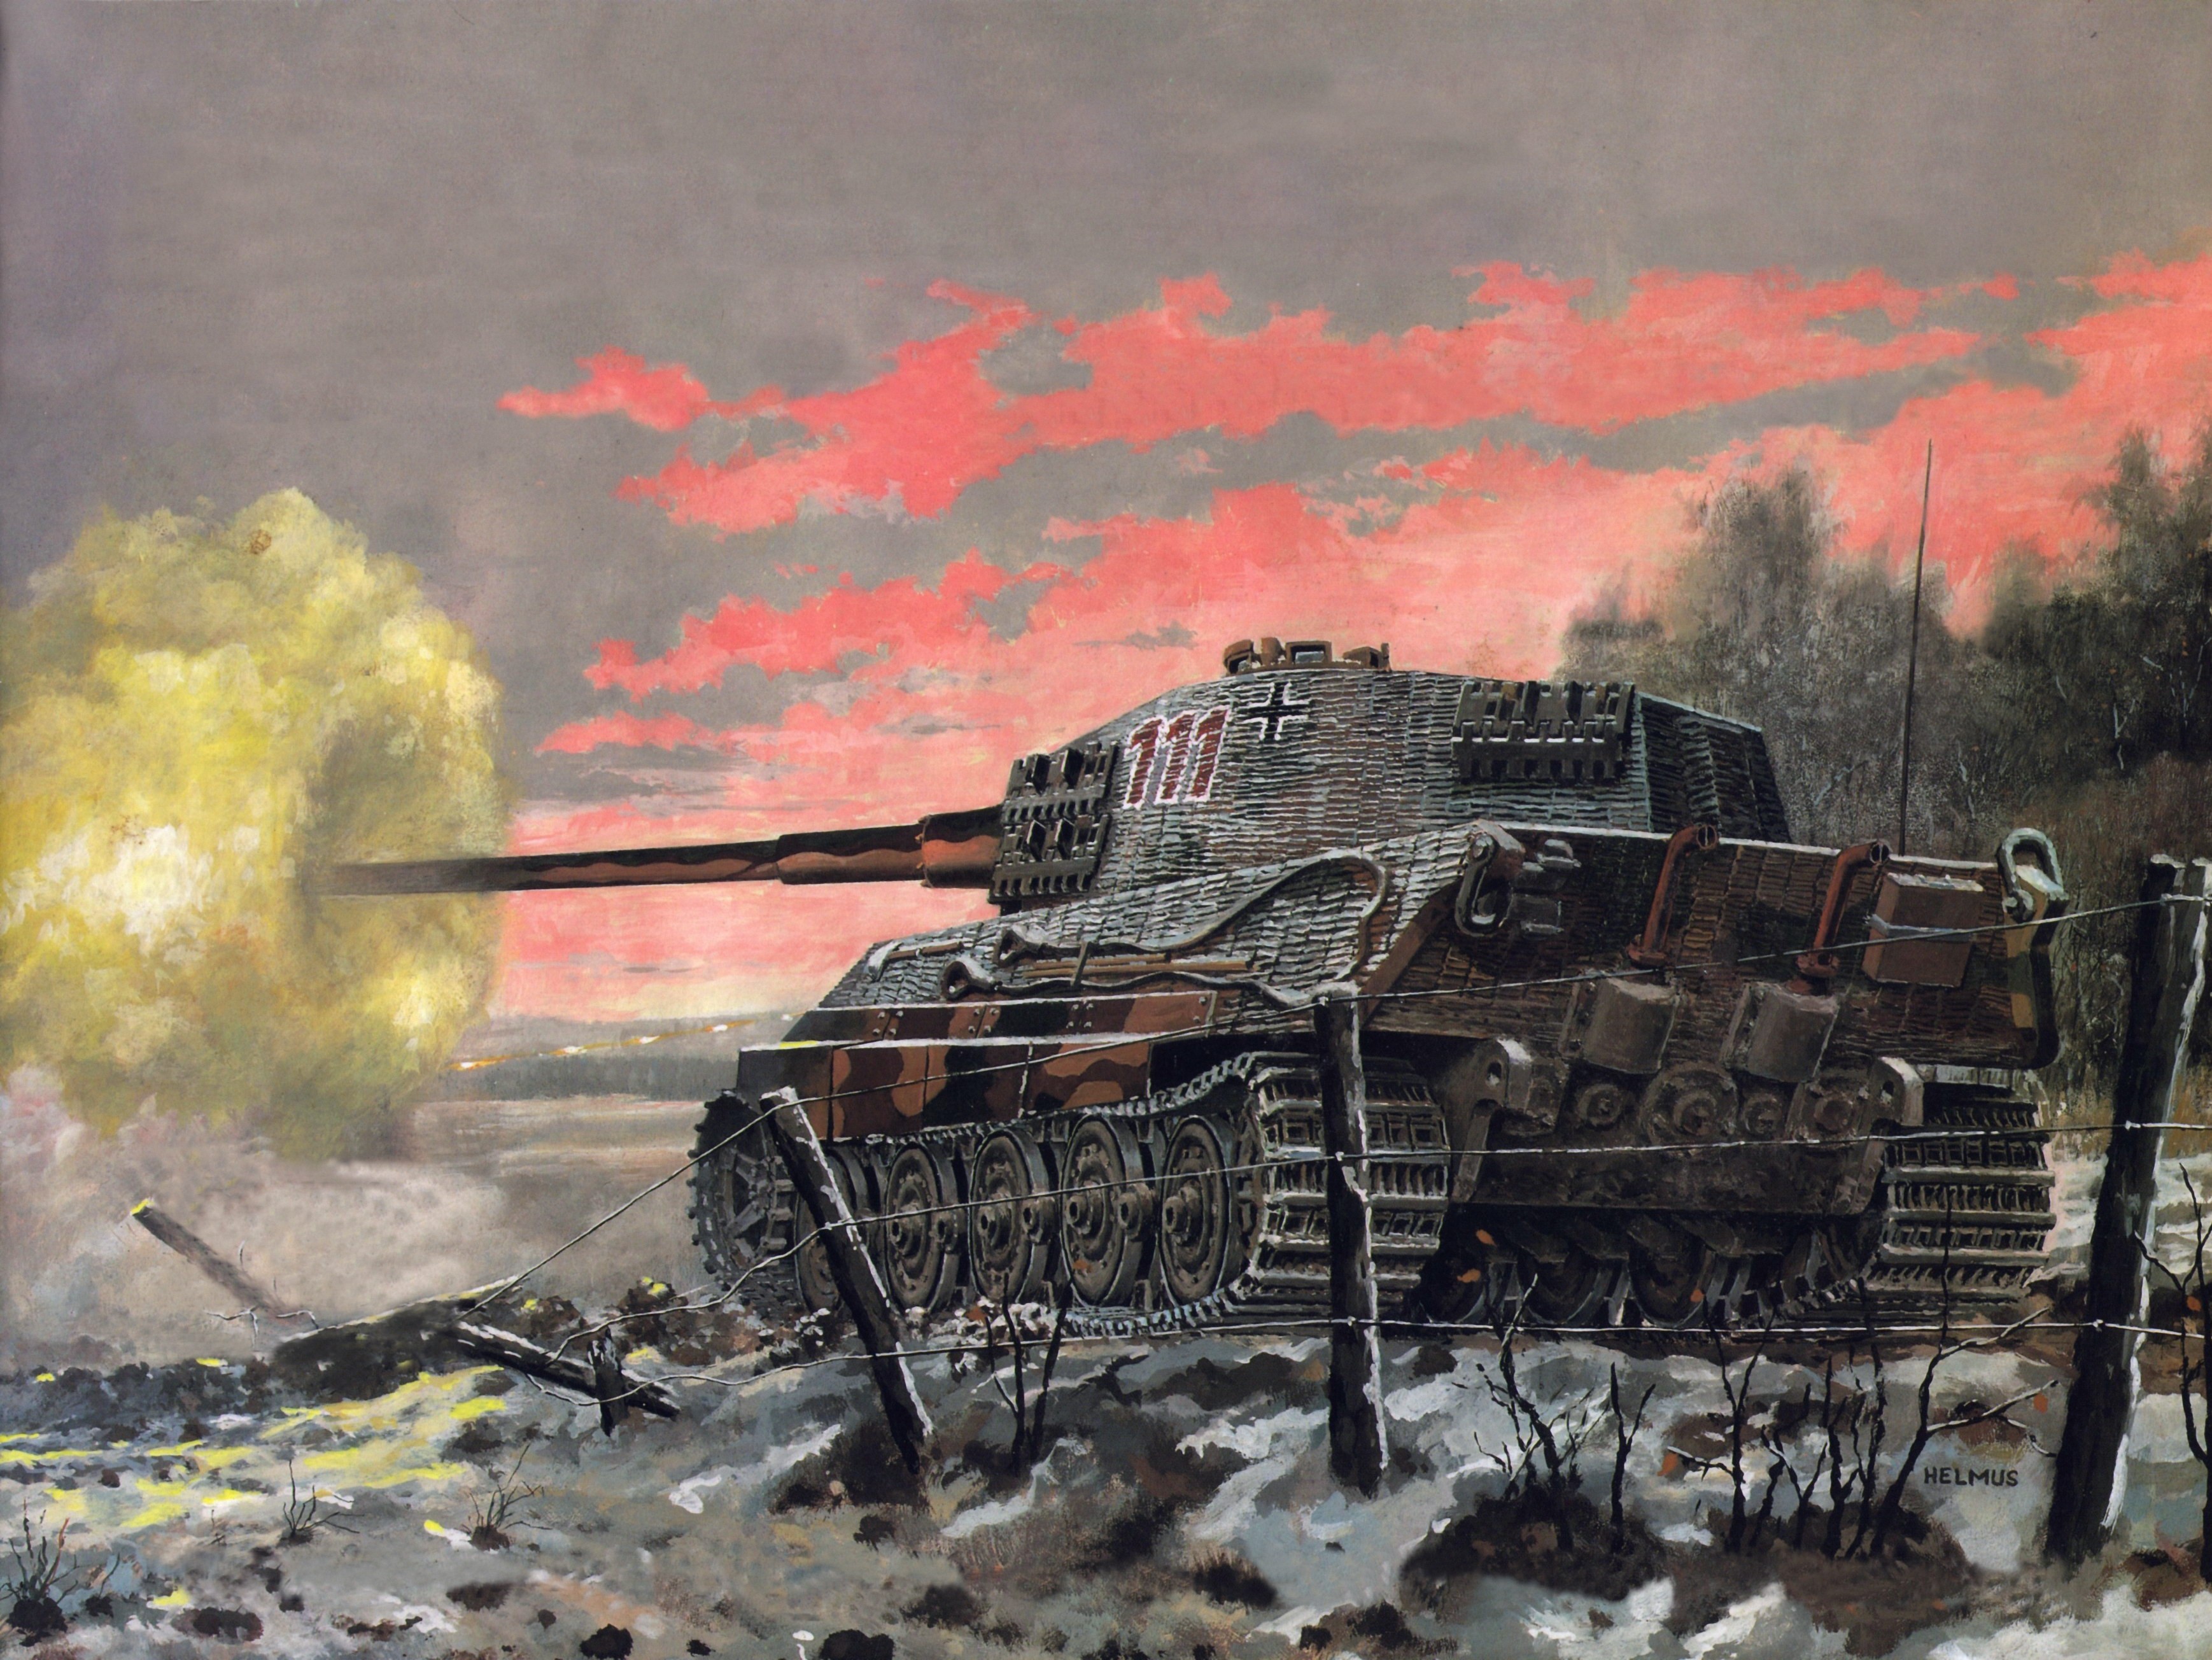 Pz.Kpfw. VI Ausf. B King Tiger, Painting Art, Tanks Gallery HD Wallpaper